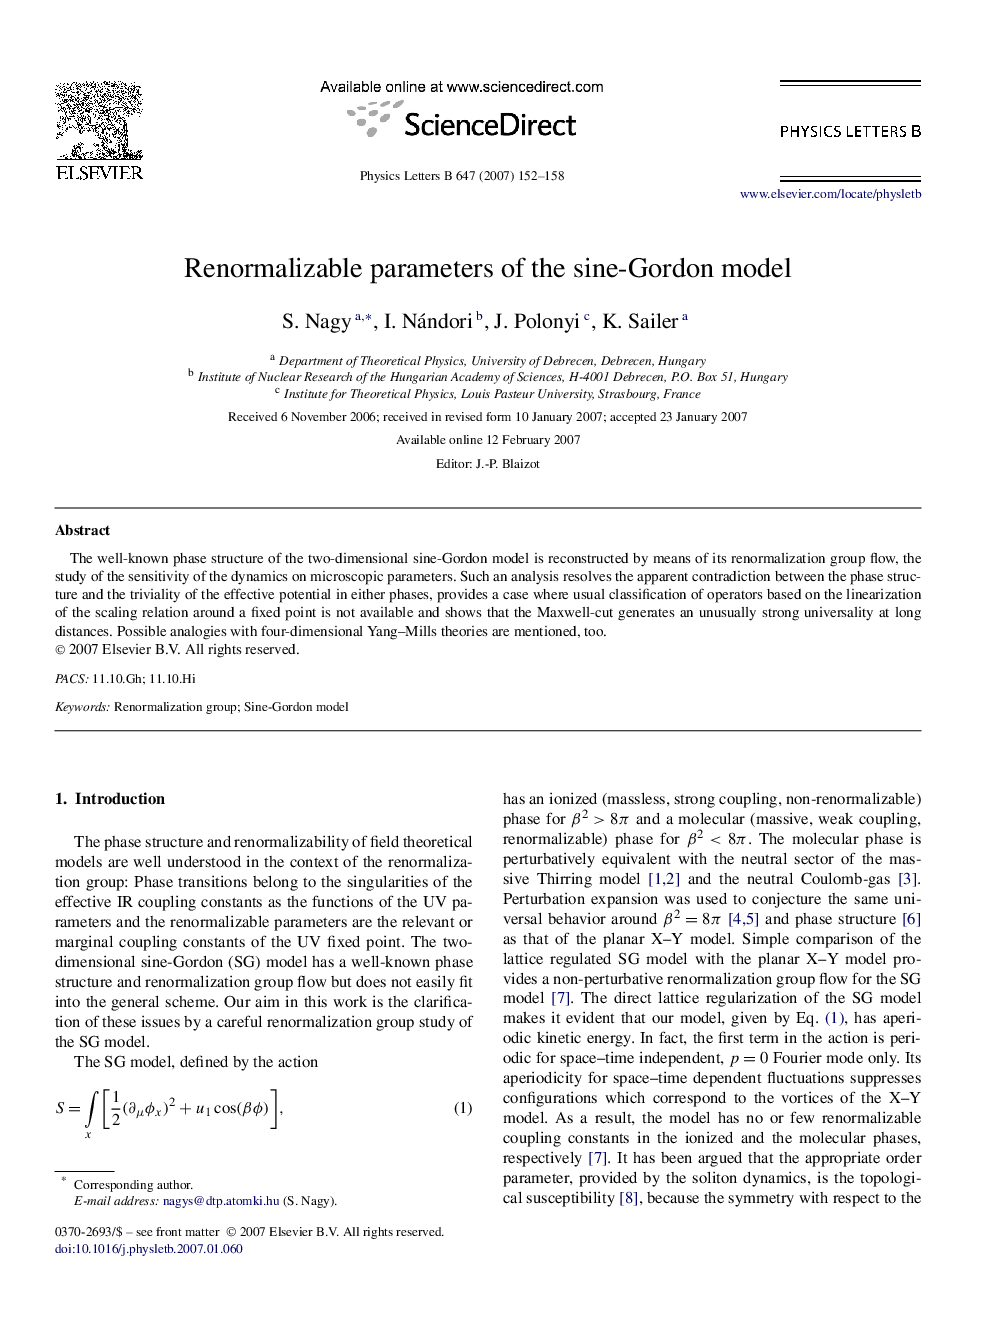 Renormalizable parameters of the sine-Gordon model